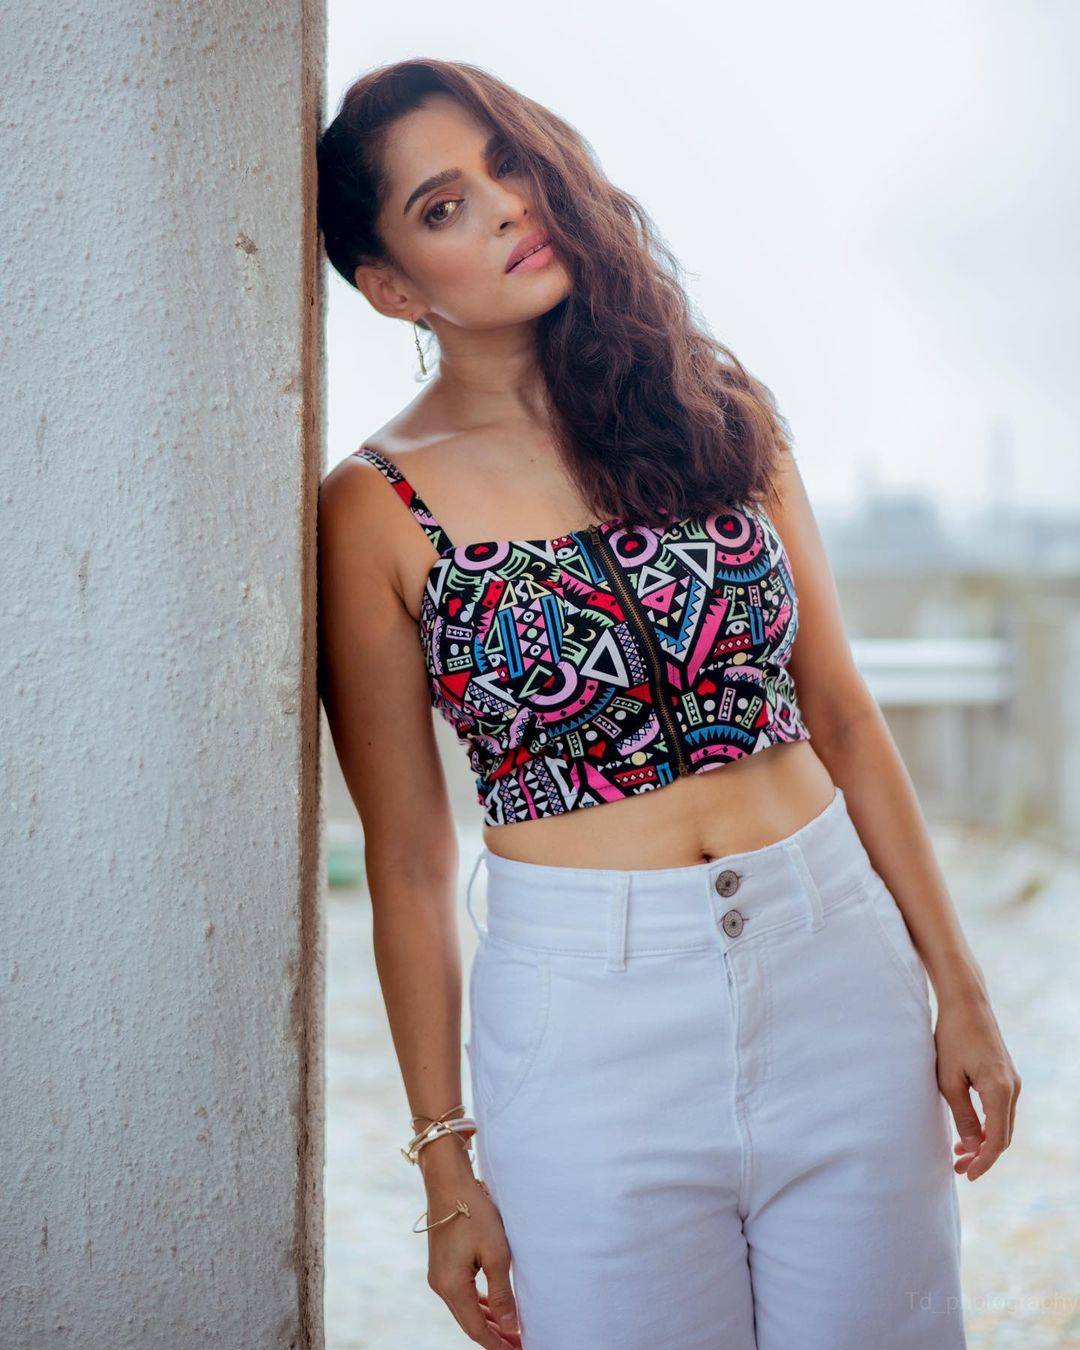 Priya Bapat, the 'Fashion Queen' of Marathi film industry Pics | Priya ...